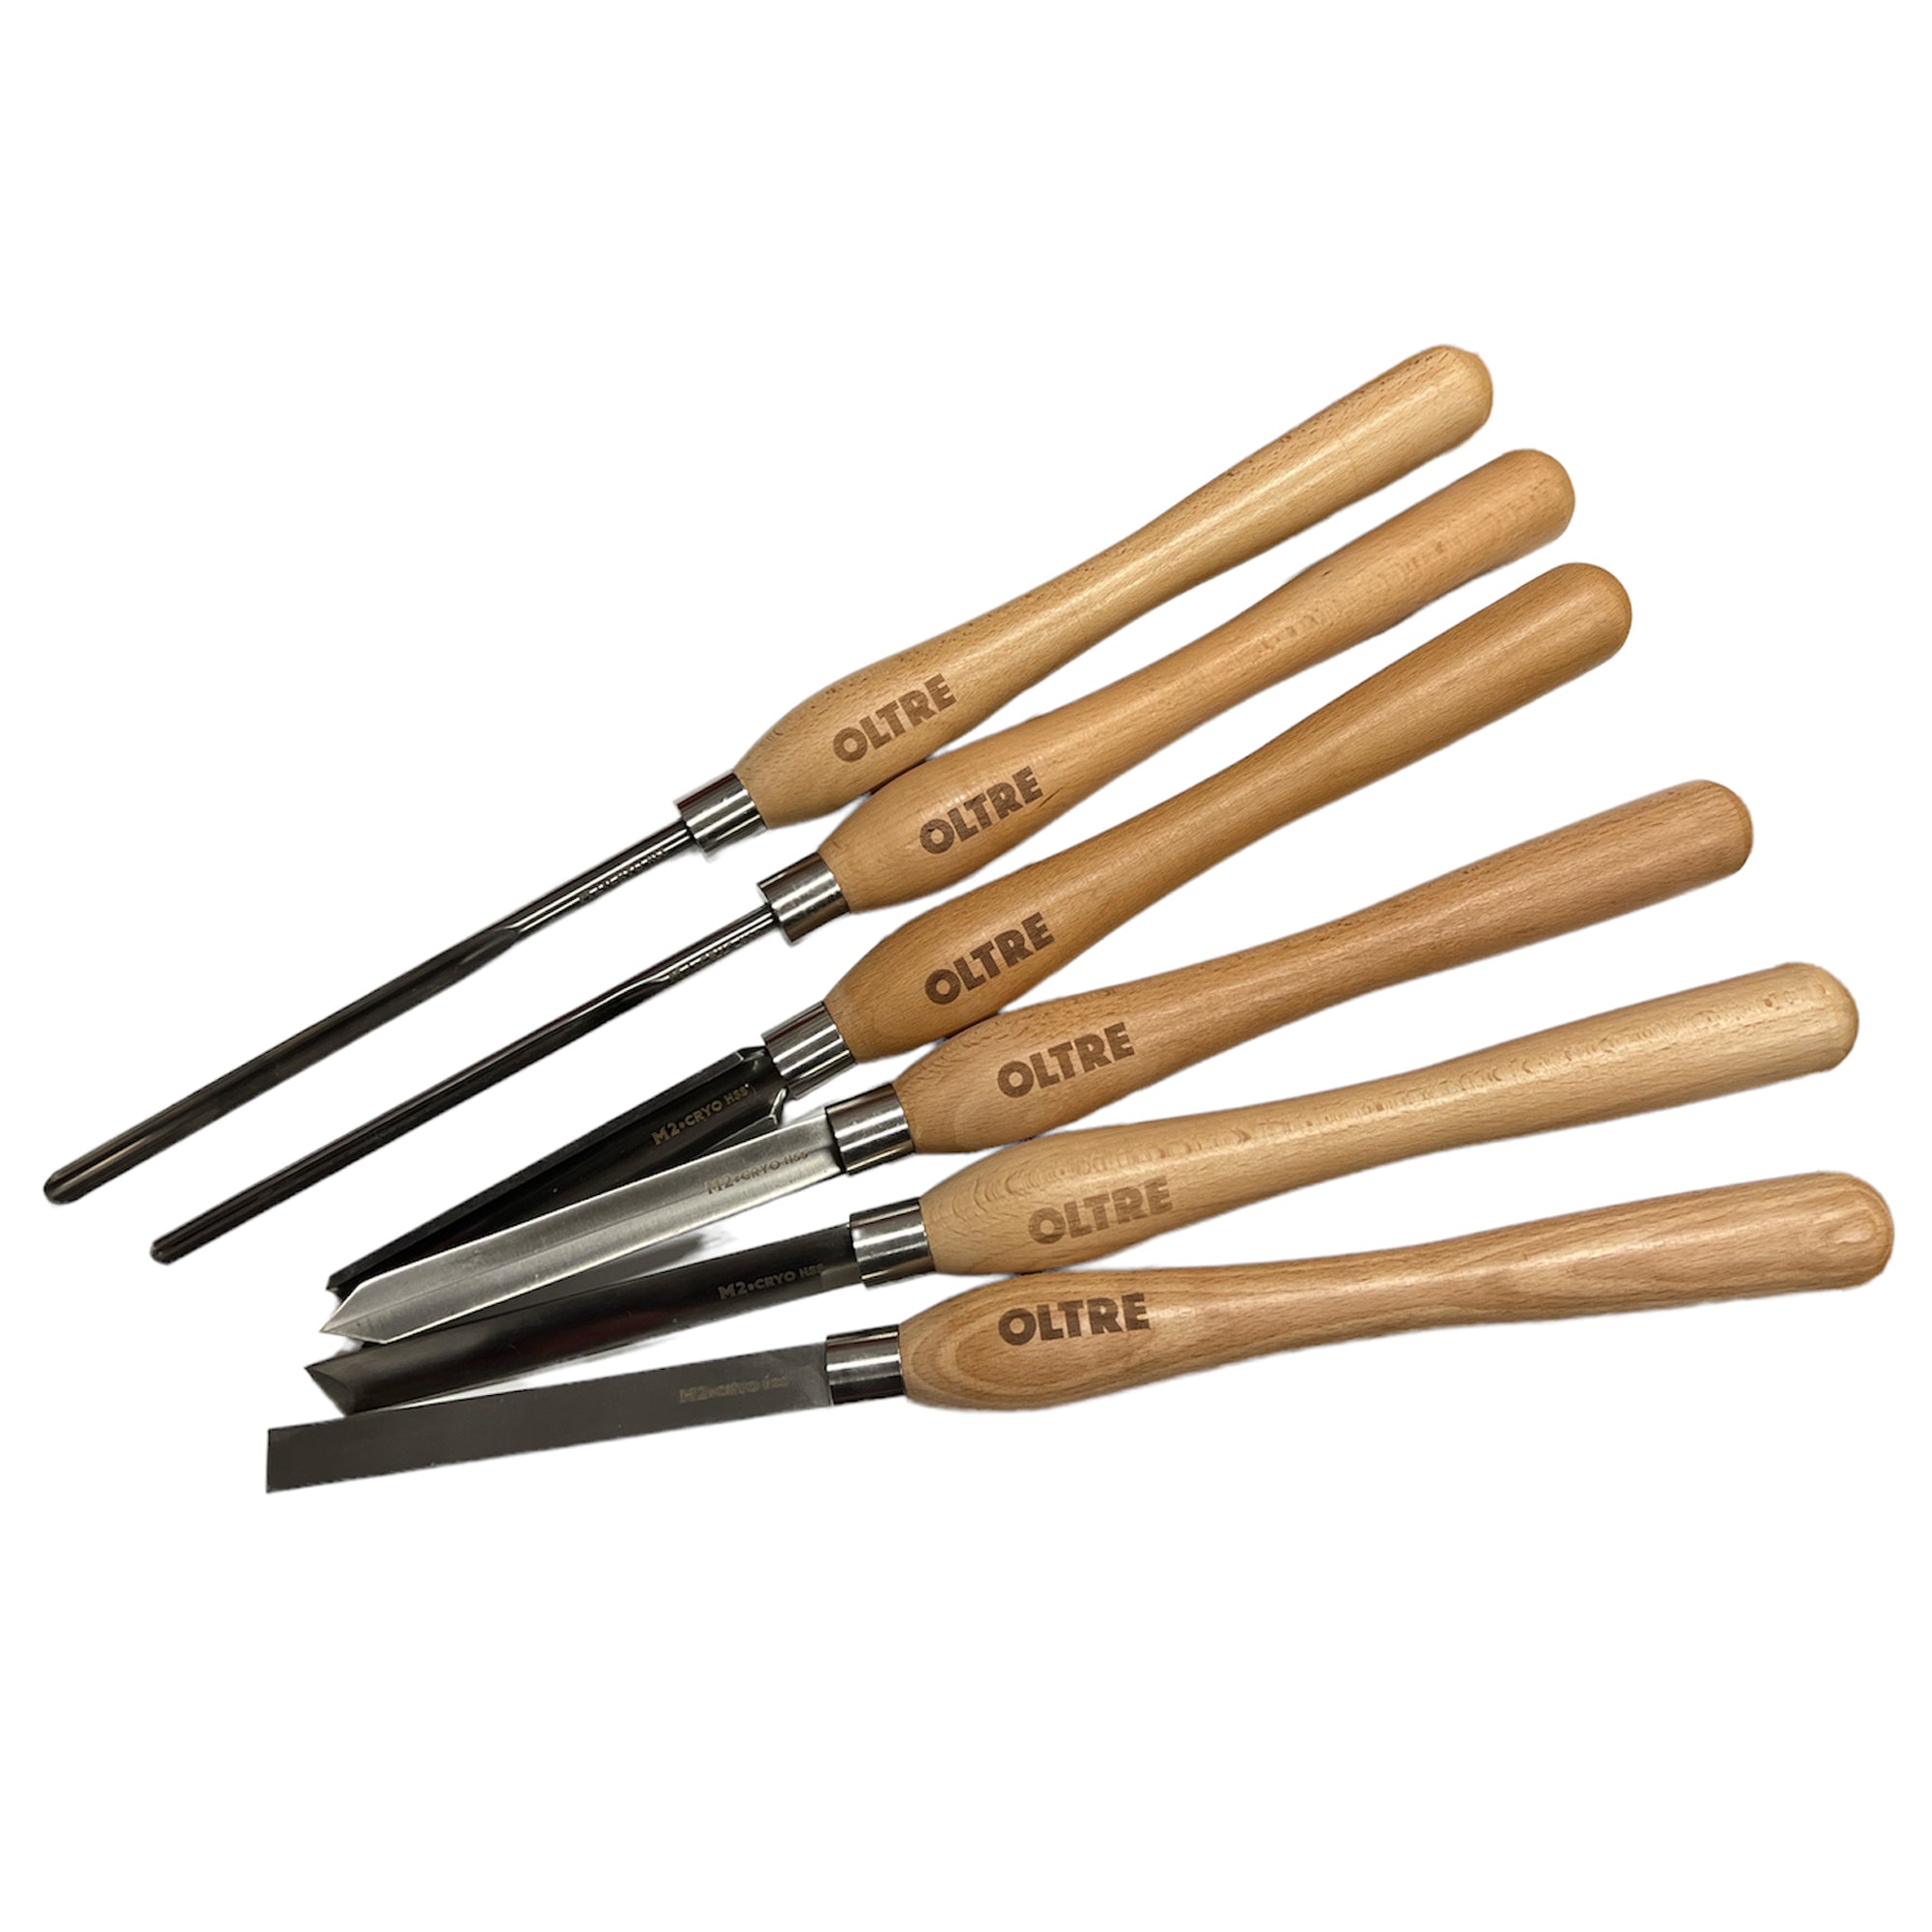 6Pce Woodturning Chisel Tool M2 CRYO HSS (Medium Turning Tools) Set by Oltre